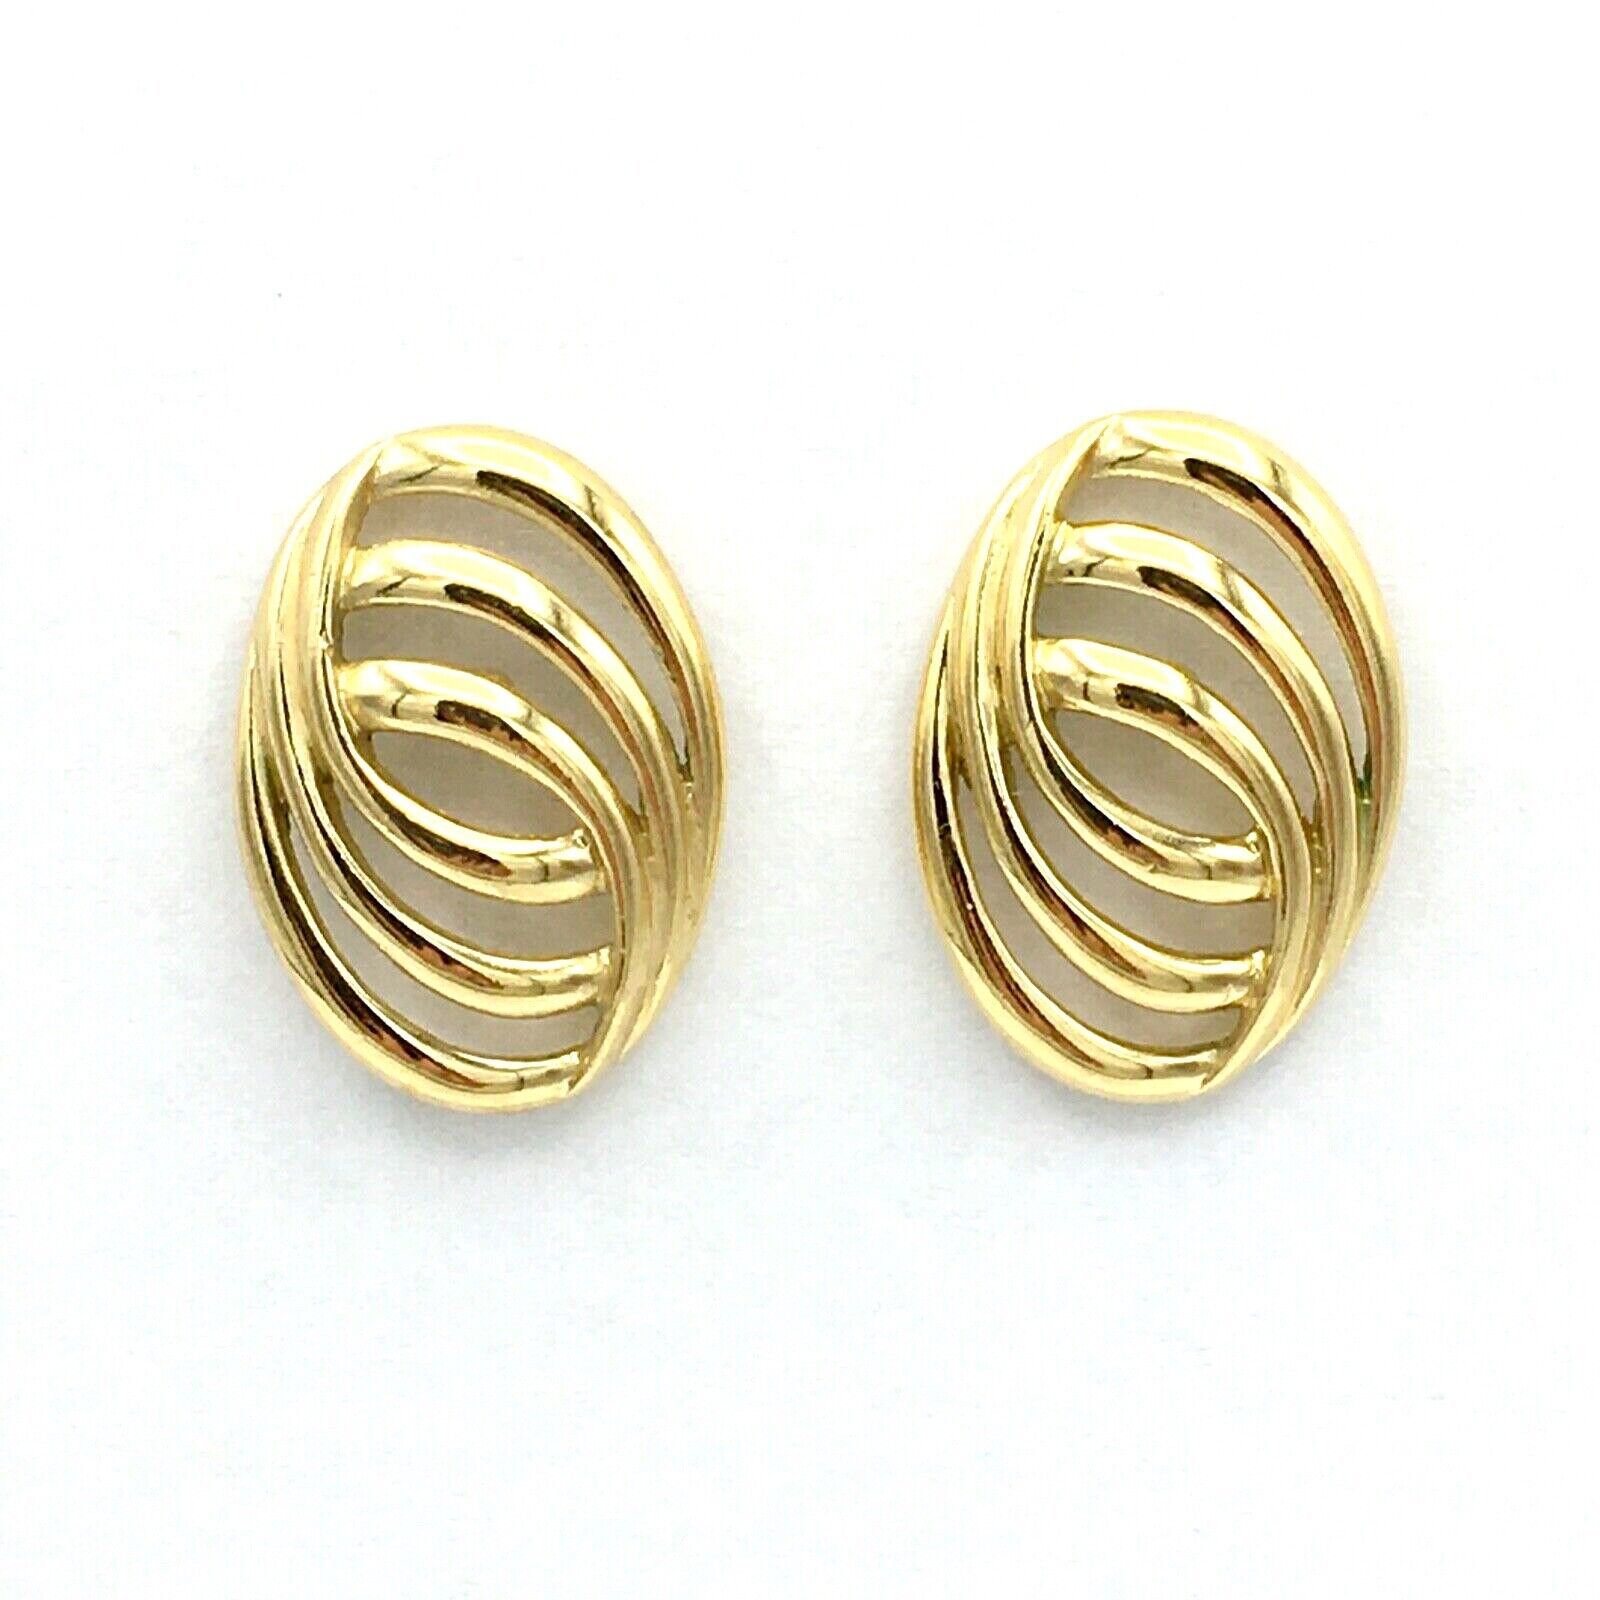 Primary image for TRIFARI interlocking oval stud earrings - gold-tone elegant openwork pierced 1"